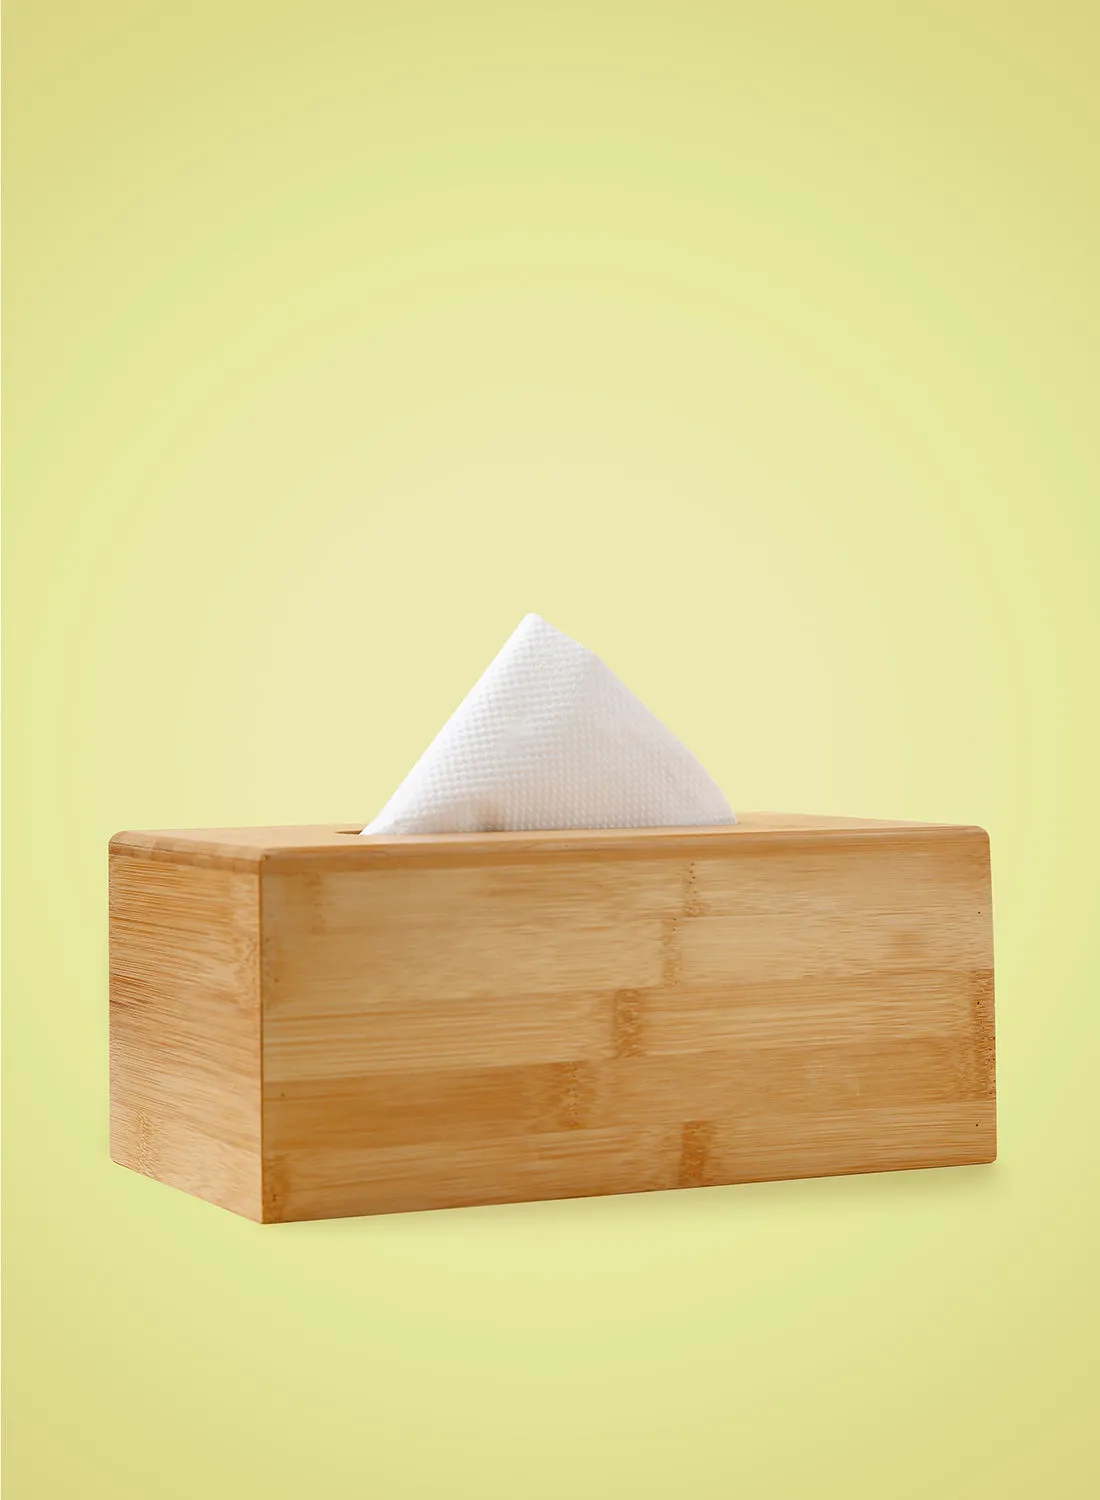 noon east Bamboo Tisue Box - For Napkins - Storage Box - Tissue Box - Brown